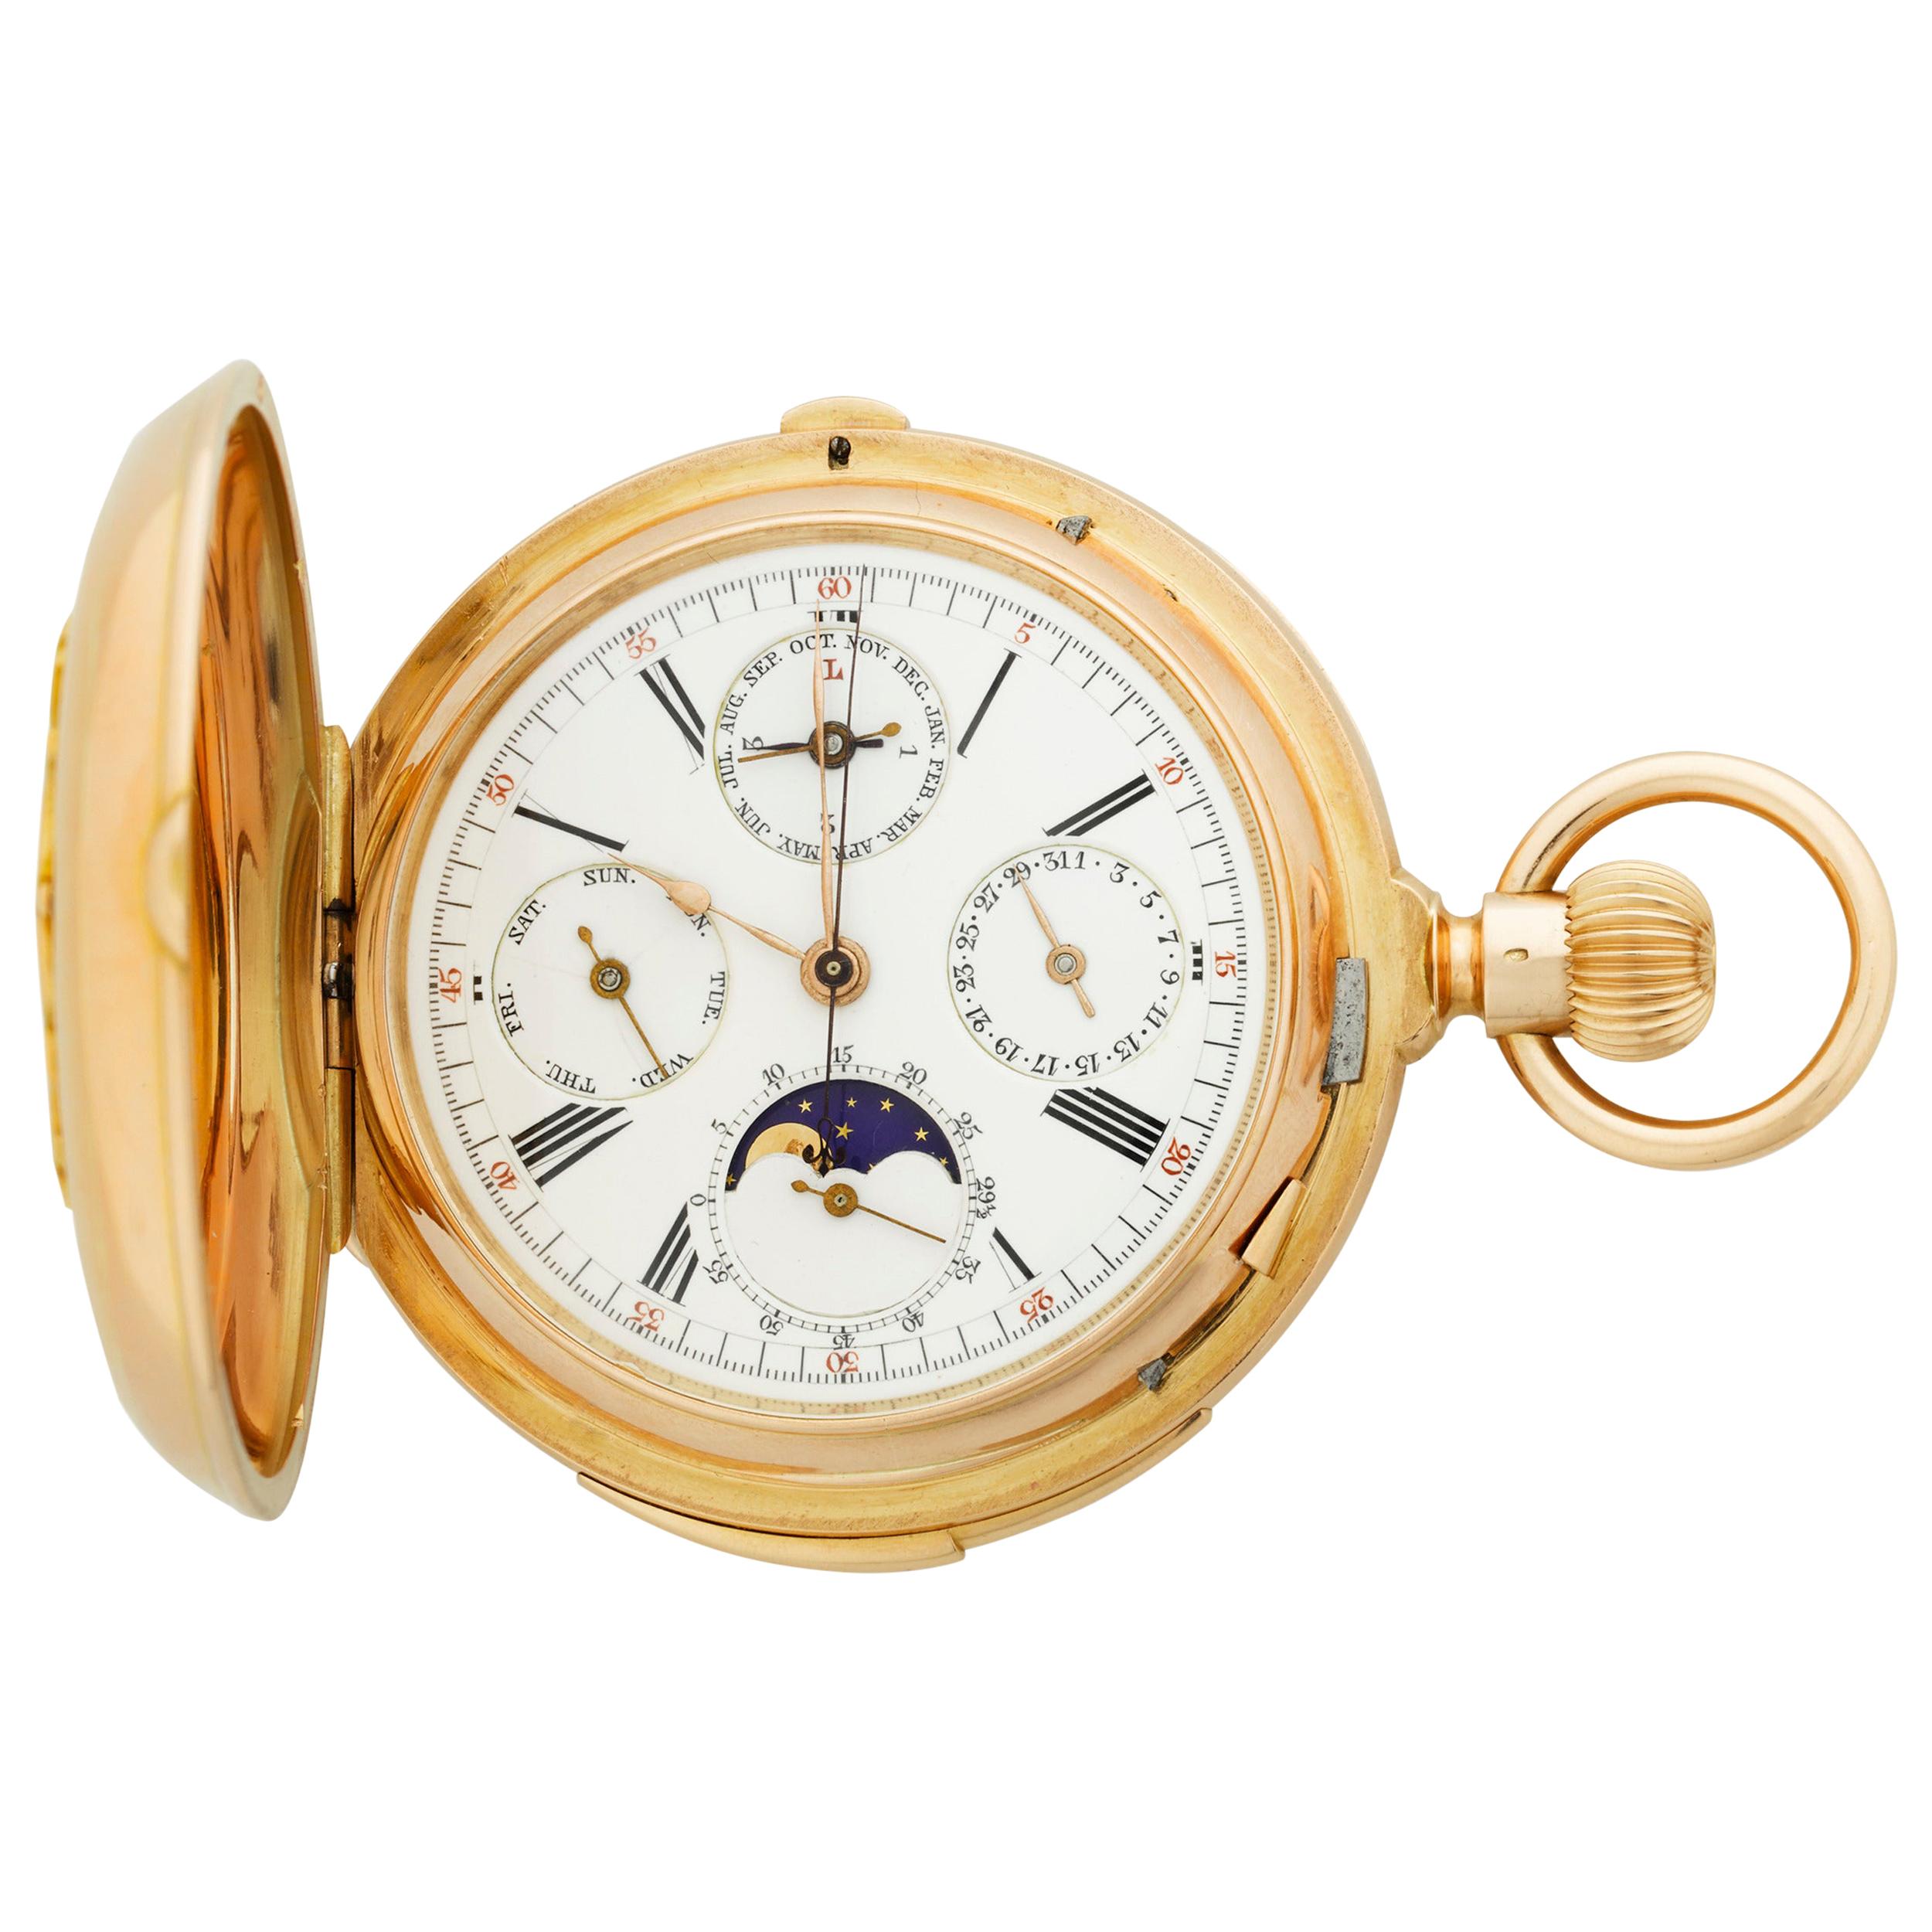 Perpetual Calendar Chronograph Pocket Watch by Redard & Co.